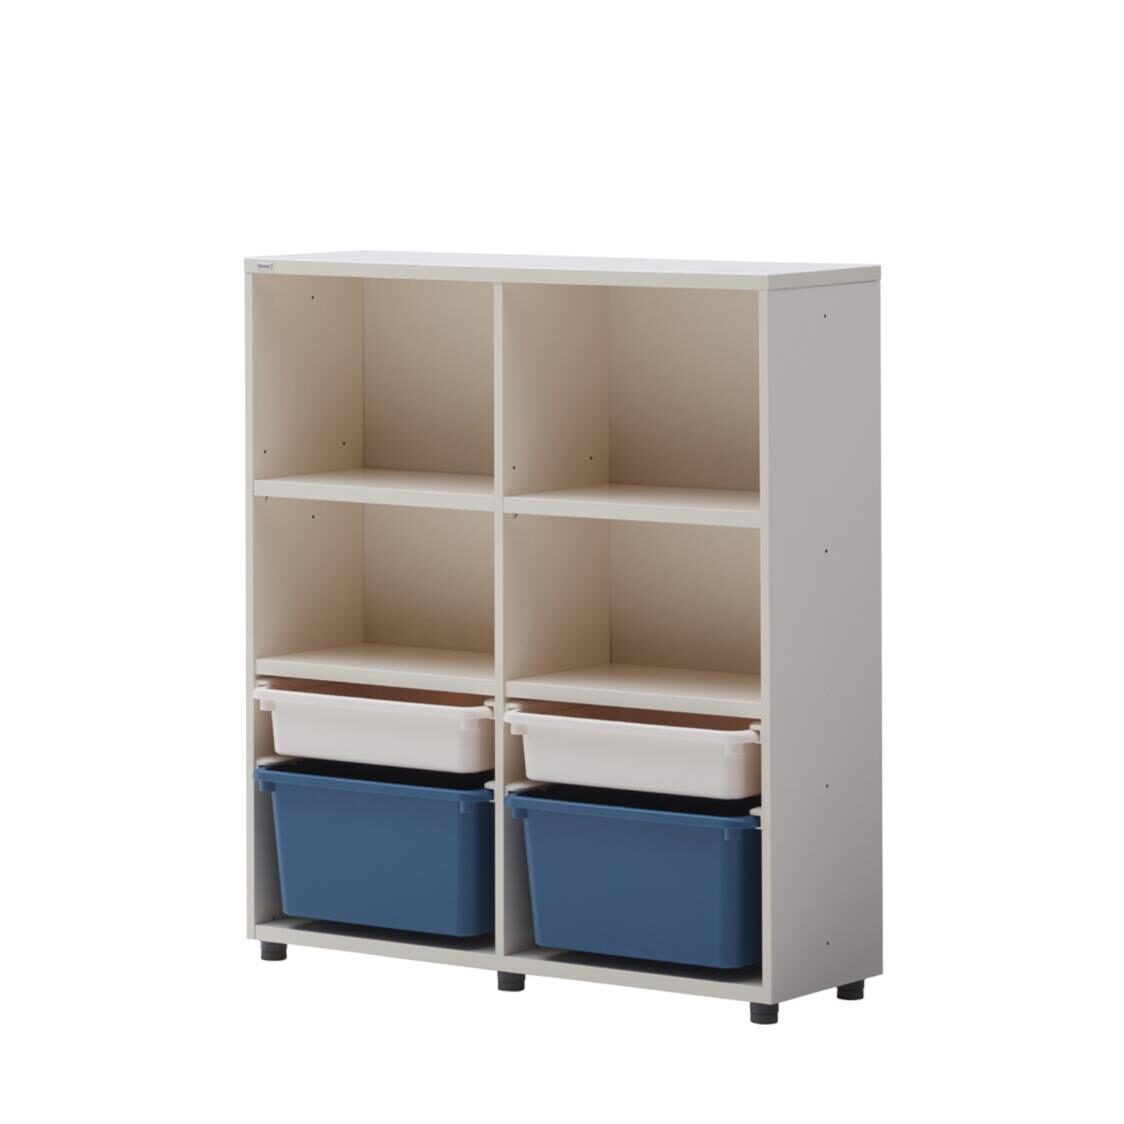 Iloom Eddi Kids 950W 3 Level PL Box Bookshelf IVIVKB Ivory Blue